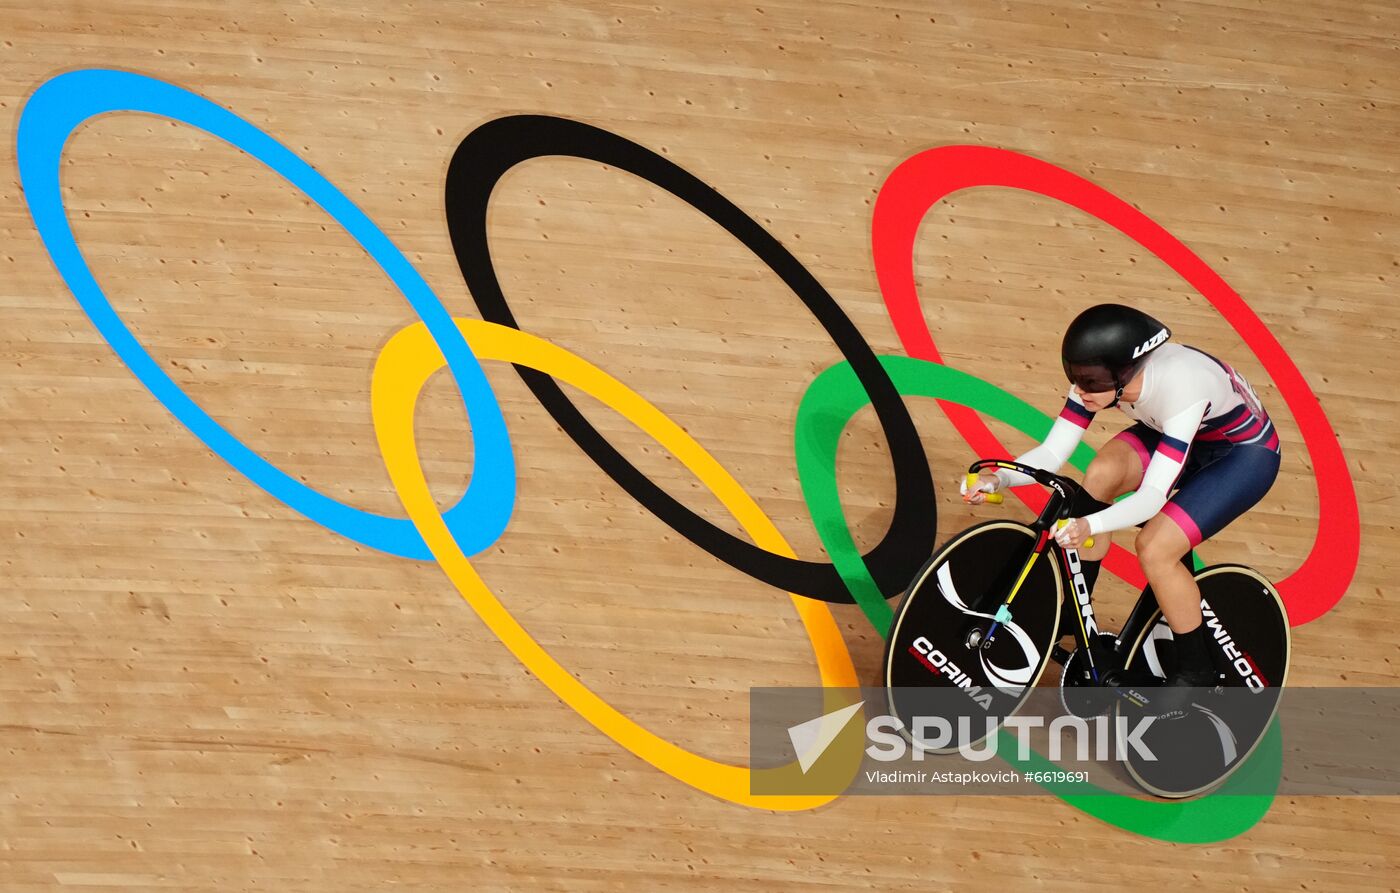 Japan Olympics 2020 Cycling Track Women Sprint Qualifying